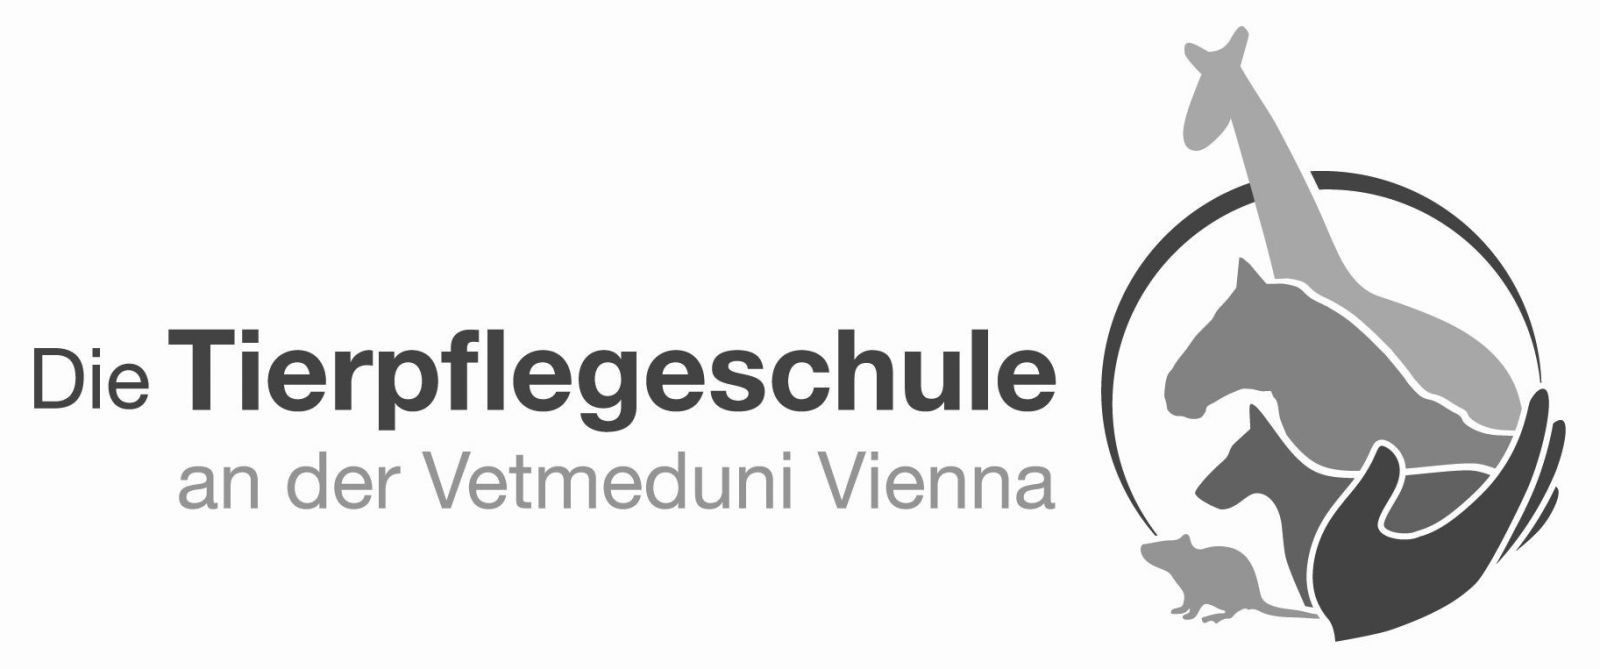 tierpflegeschule-logo_grau